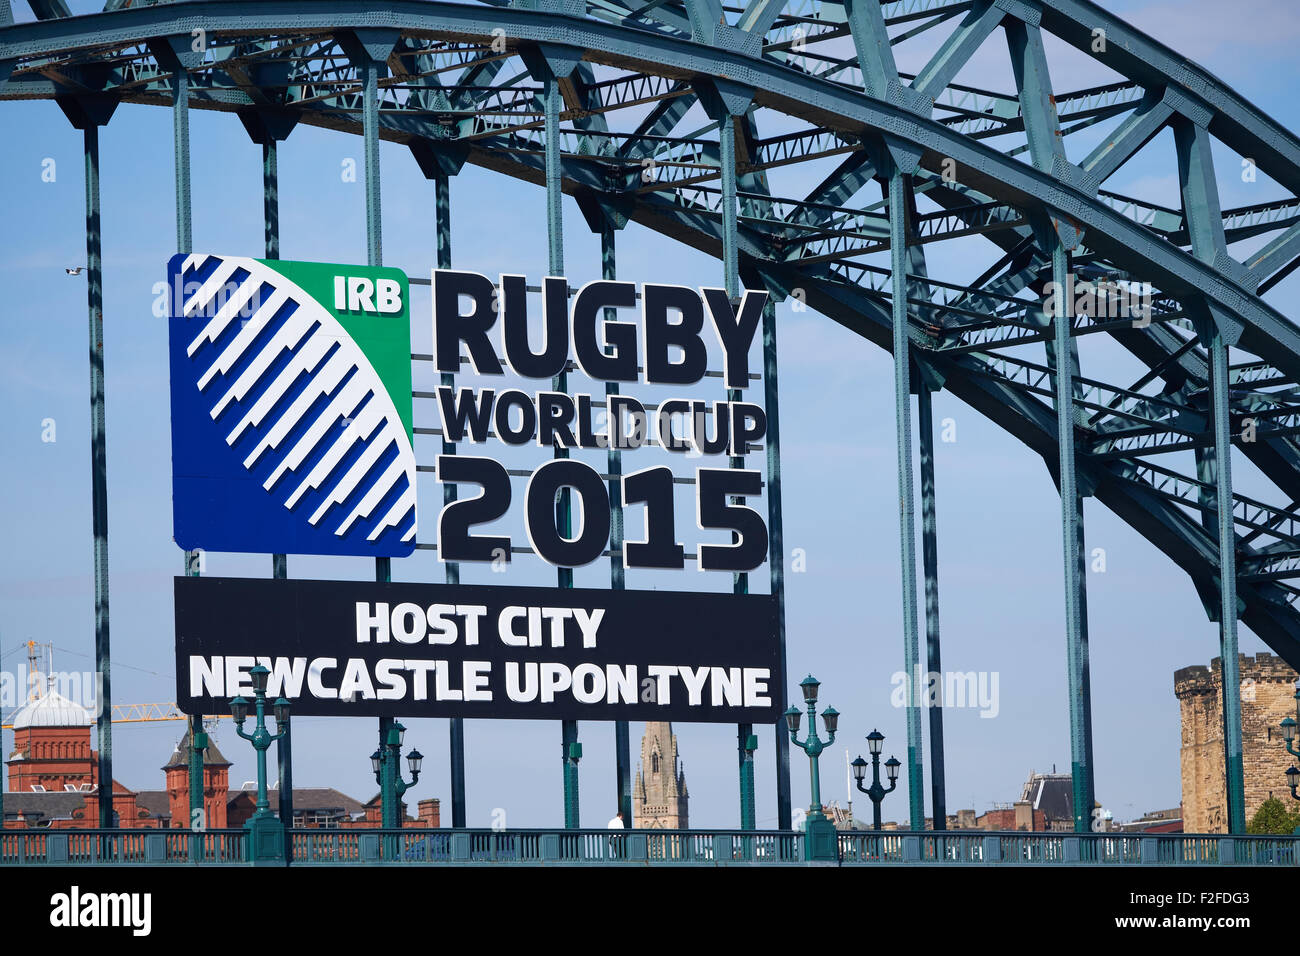 Rugby World Cup 2015 Gastgeber anmelden die Tyne Bridge, Newcastle Upon Tyne, UK. Stockfoto